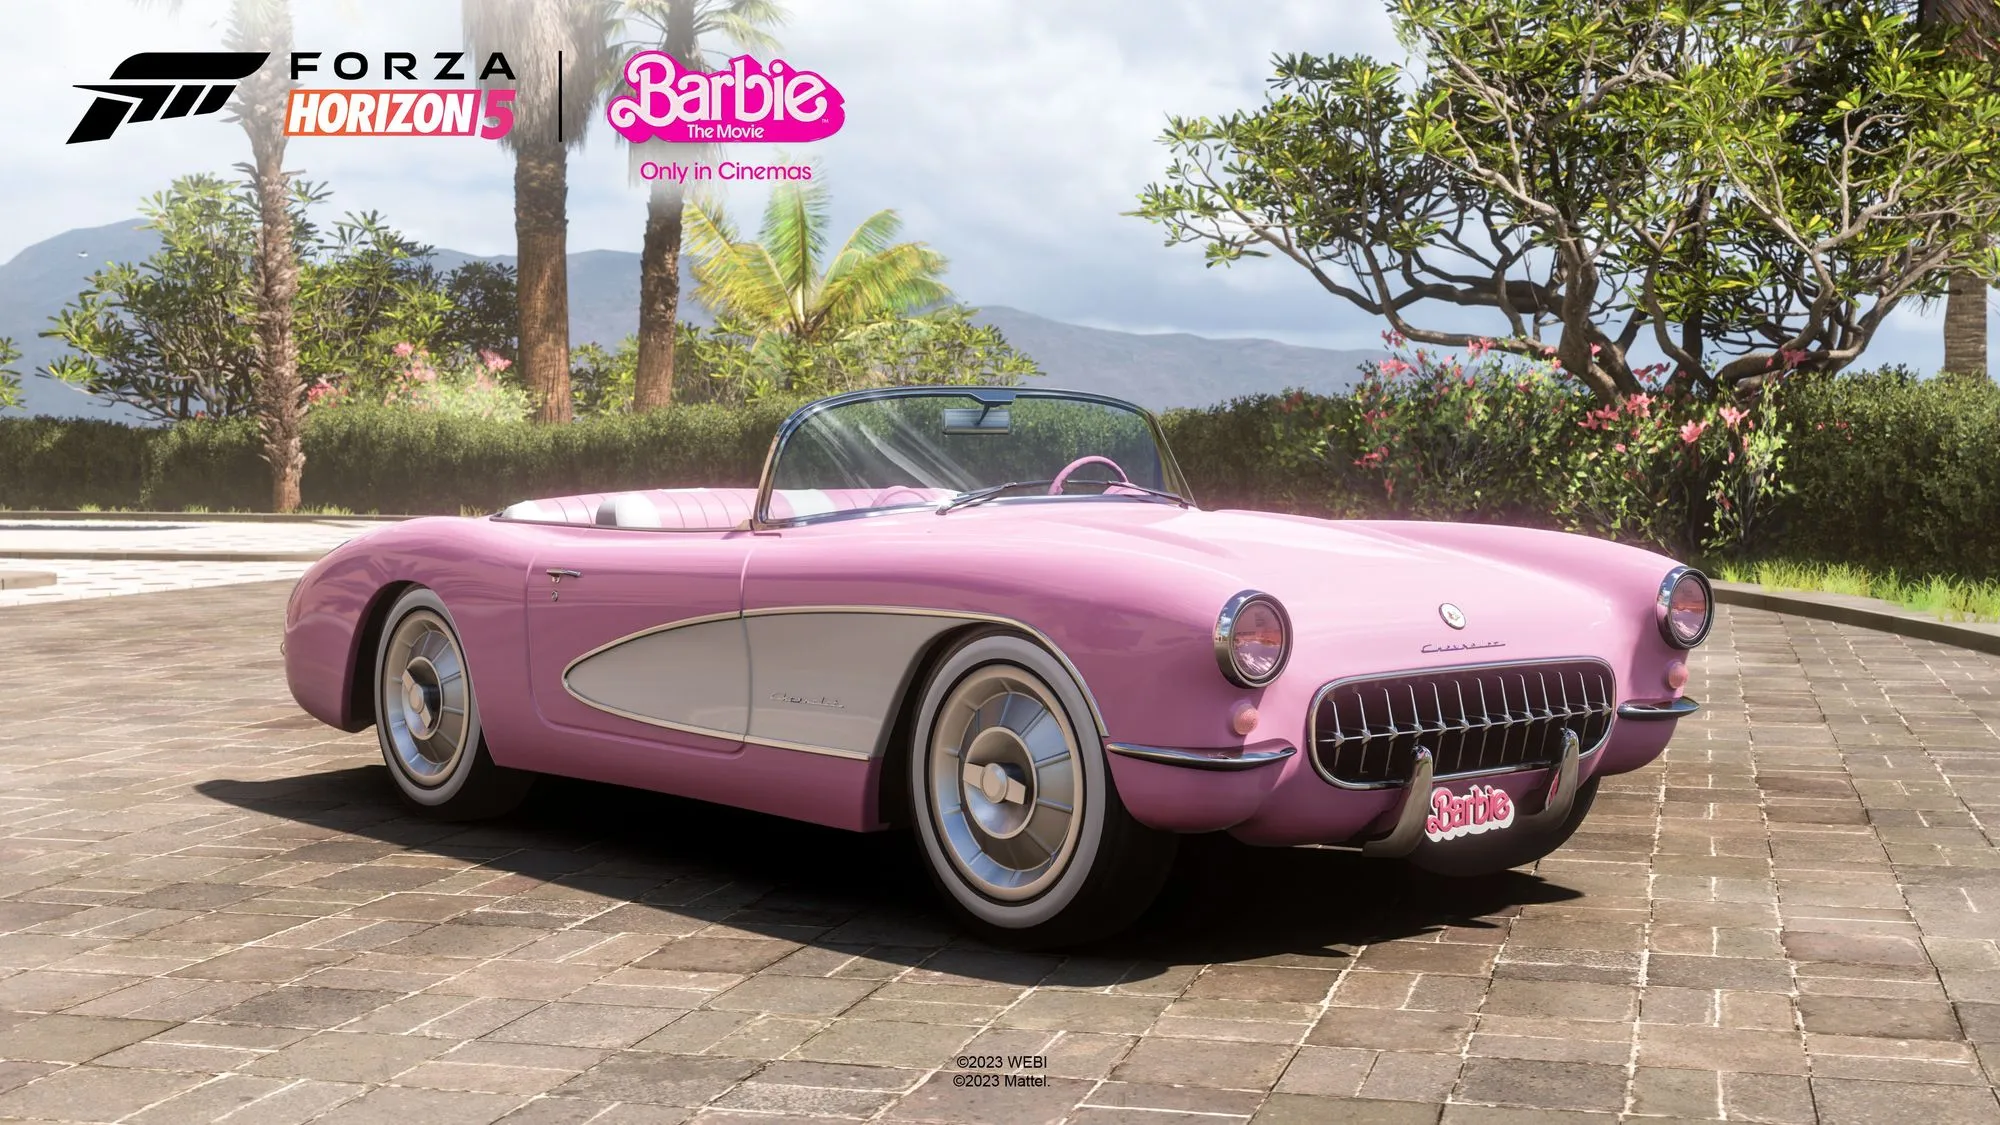 Forza Horizon Barbie Car